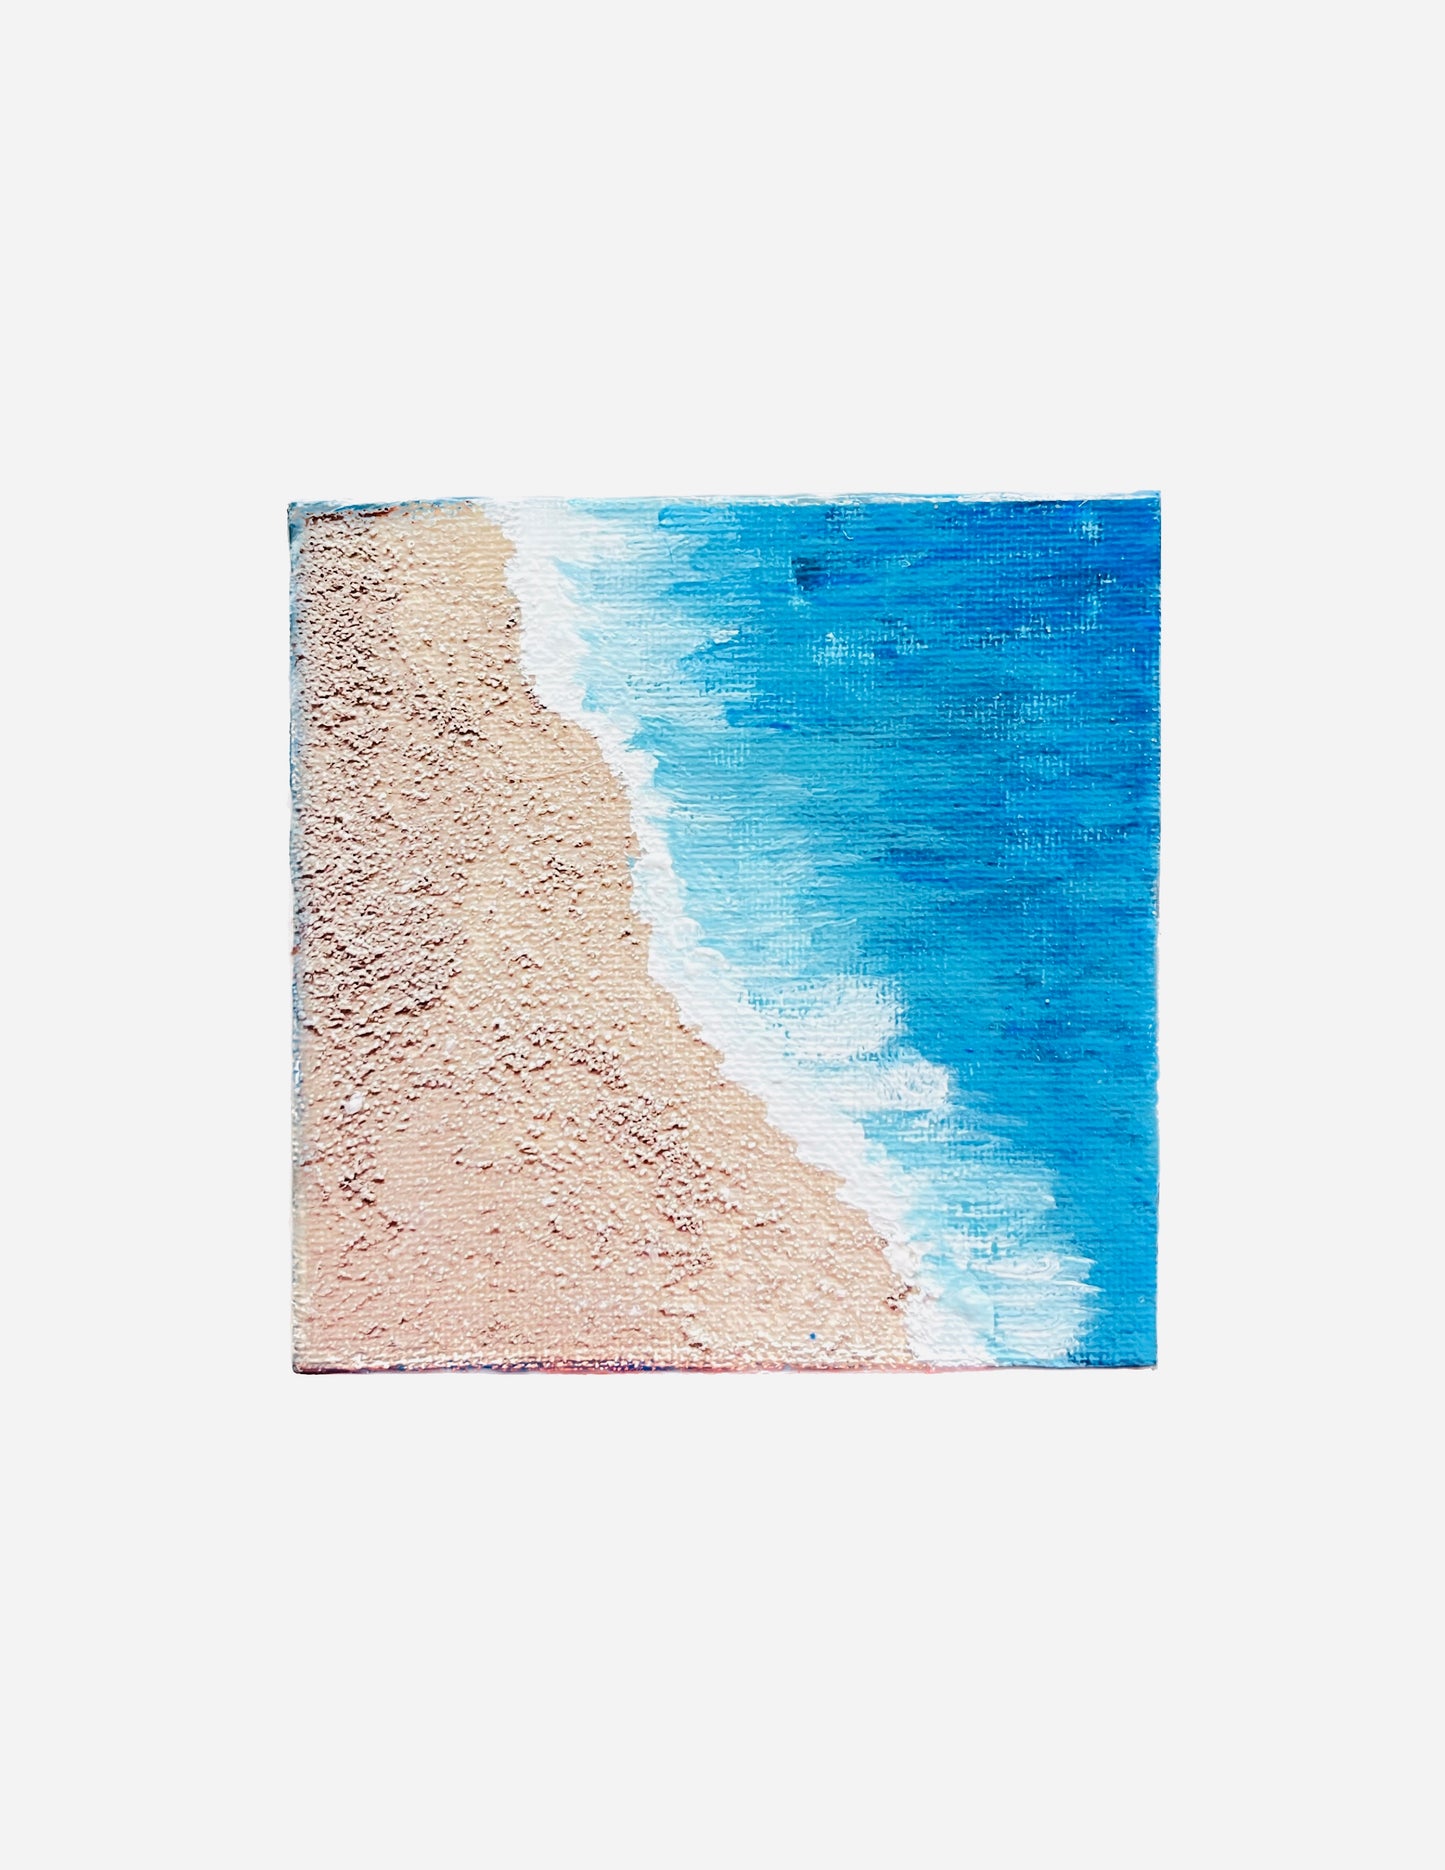 Sandy’s Beach Painting